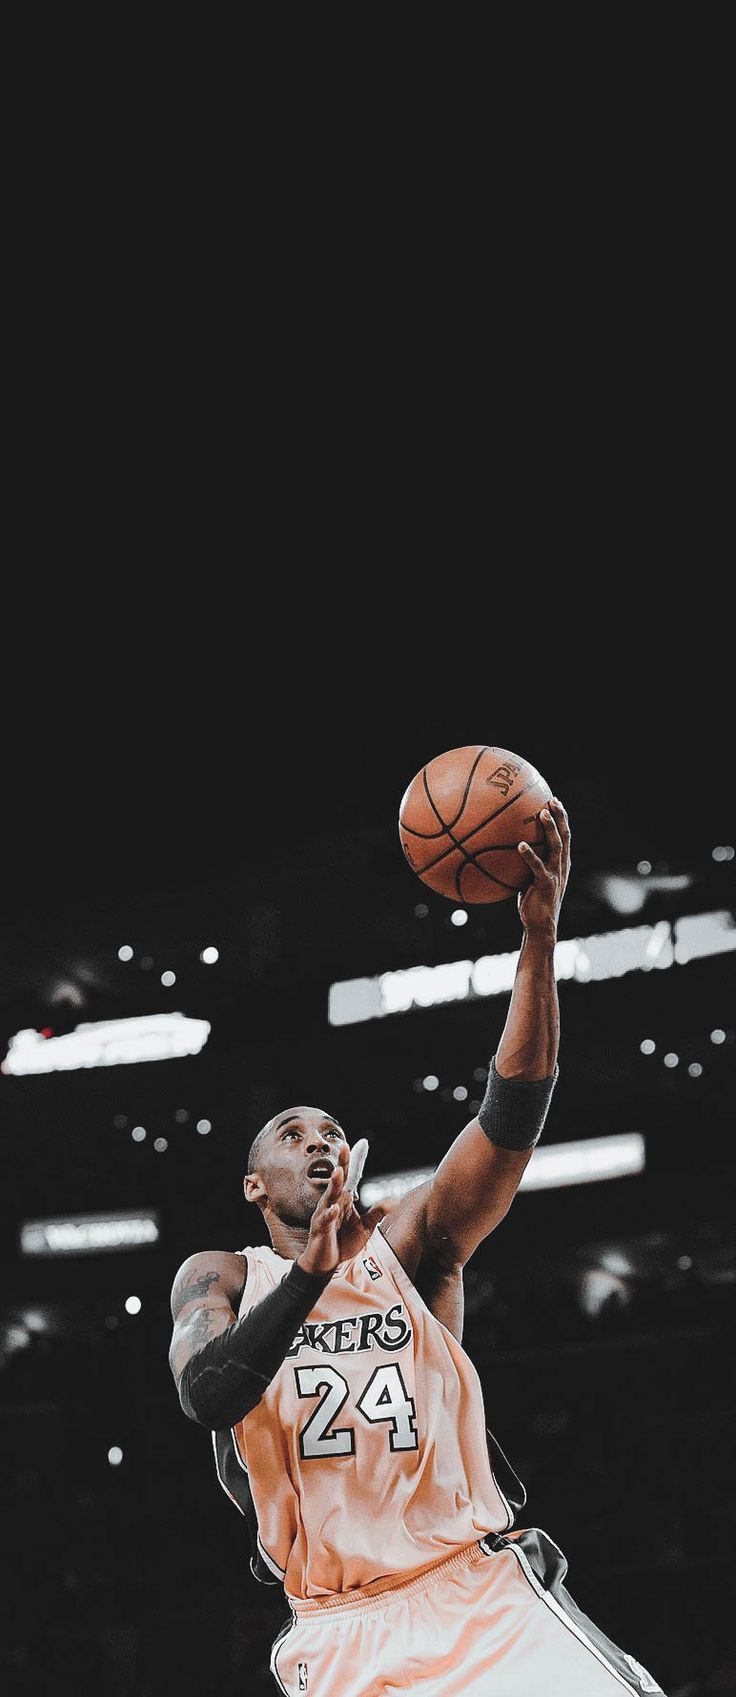 Kobe Bryant 24 wallpaper I made for my phone. - Kobe Bryant, NBA